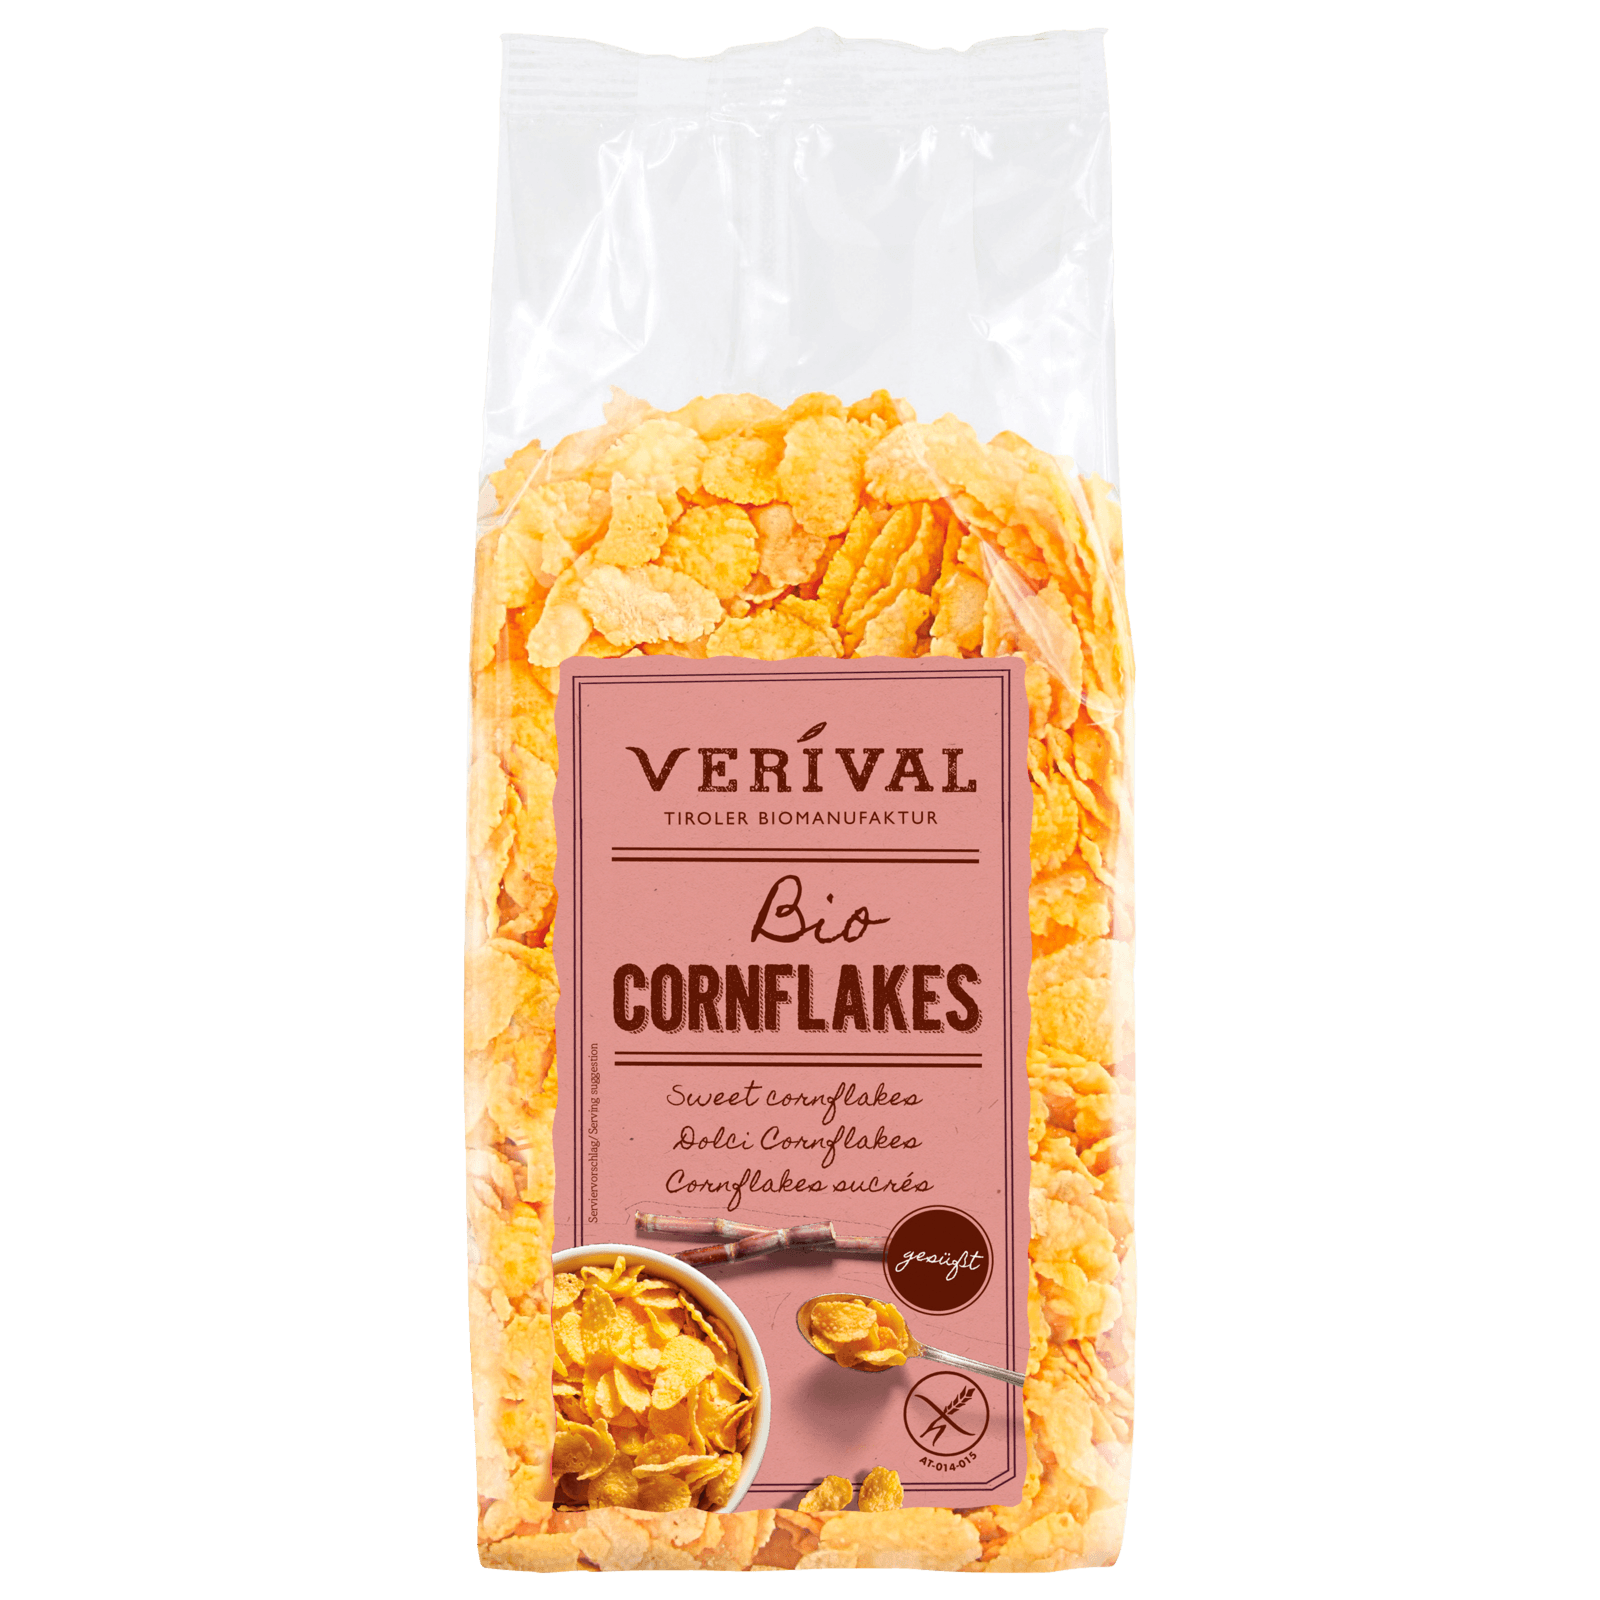 Verival Bio Cornflakes gesüßt 250g  für 2.79 EUR